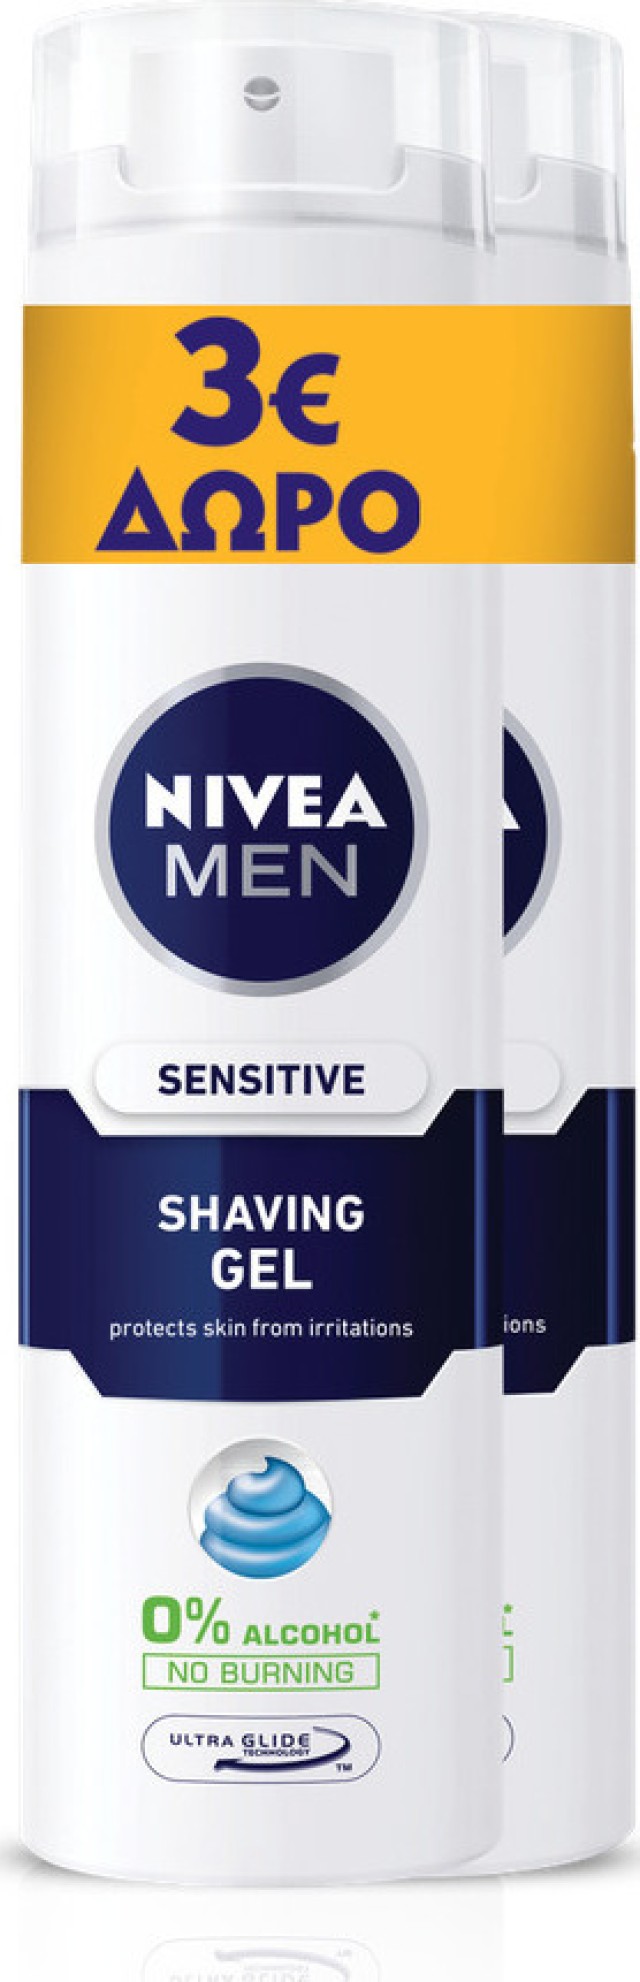 Nivea Men PROMO Sensitive Shaving Gel Ξυρίσματος 2x200ml 1+1 ΔΩΡΟ -3€ Επί Της Τιμής